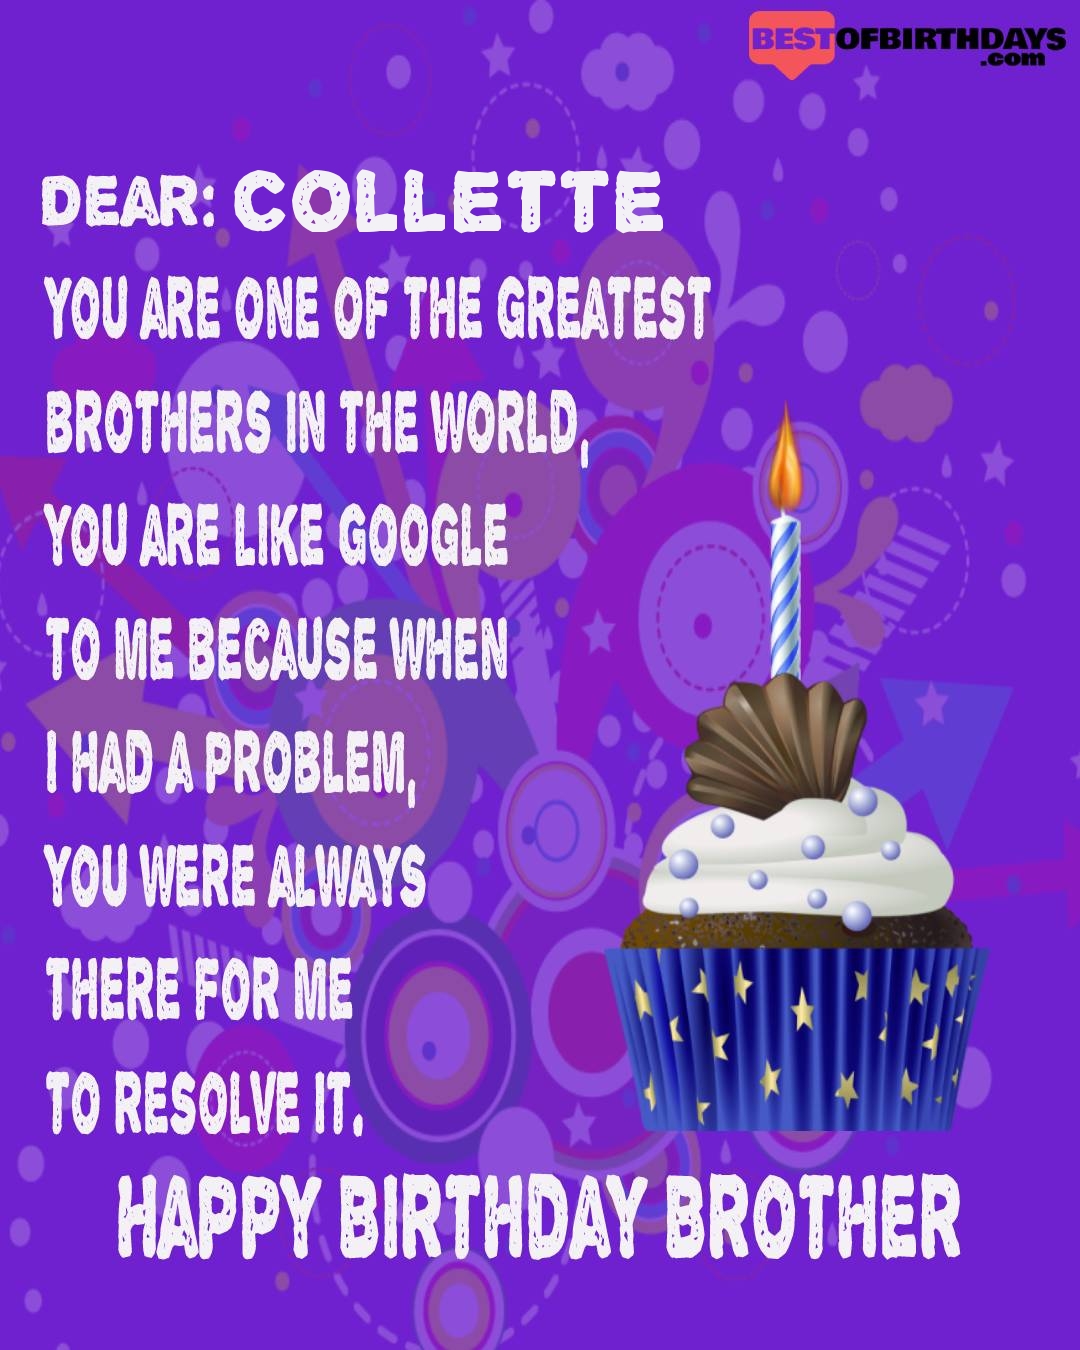 Happy birthday collette bhai brother bro